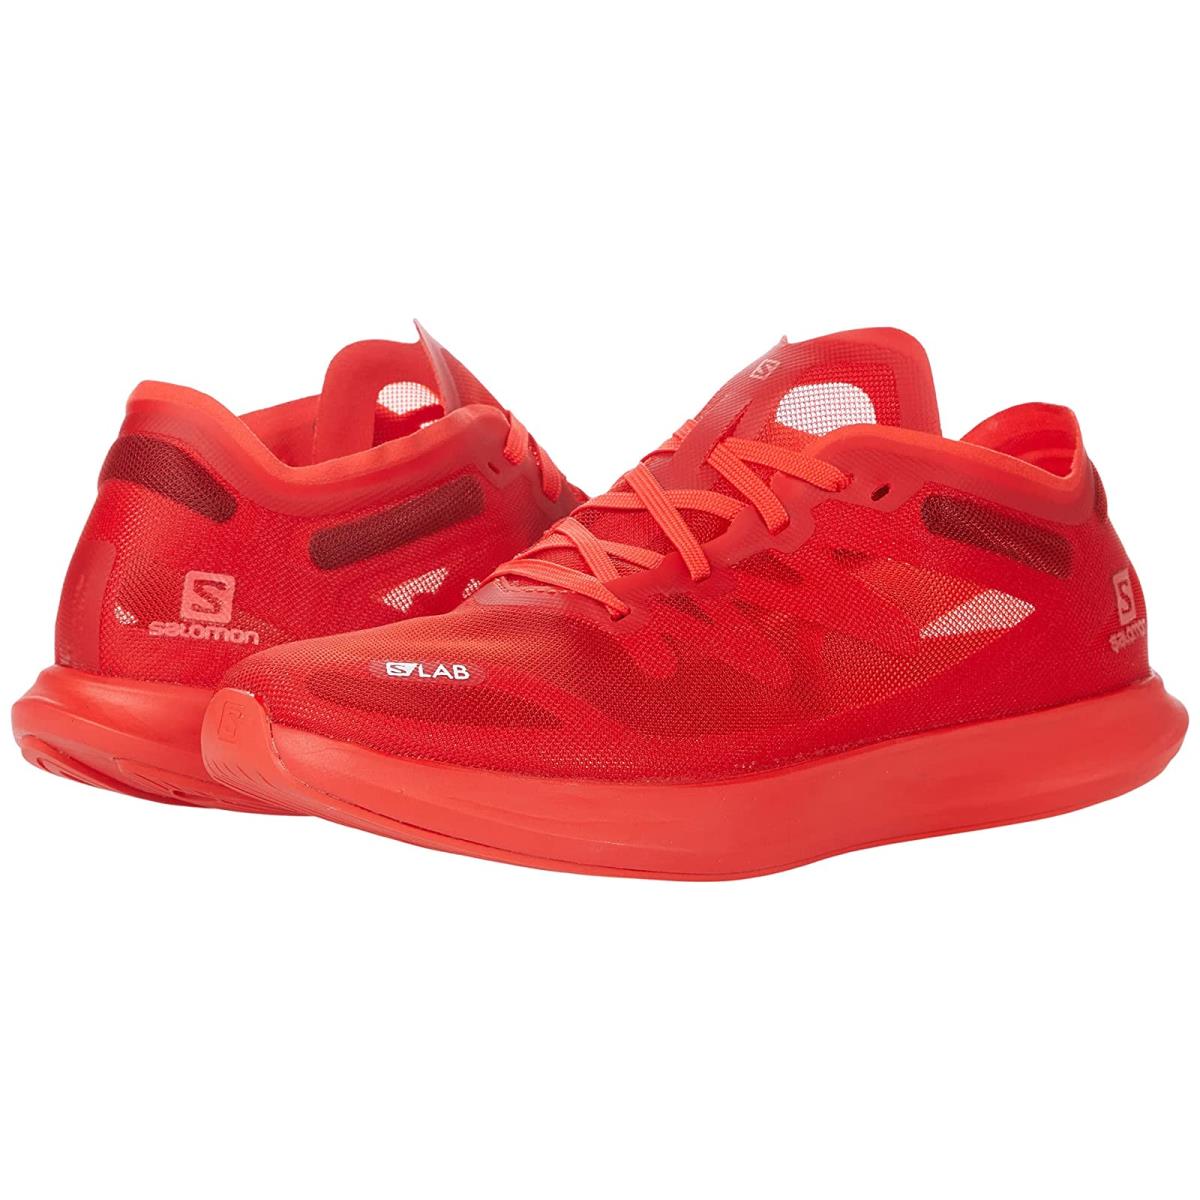 Unisex Sneakers Athletic Shoes Salomon S/lab Phantasm Racing Red/Racing Red/Racing Red